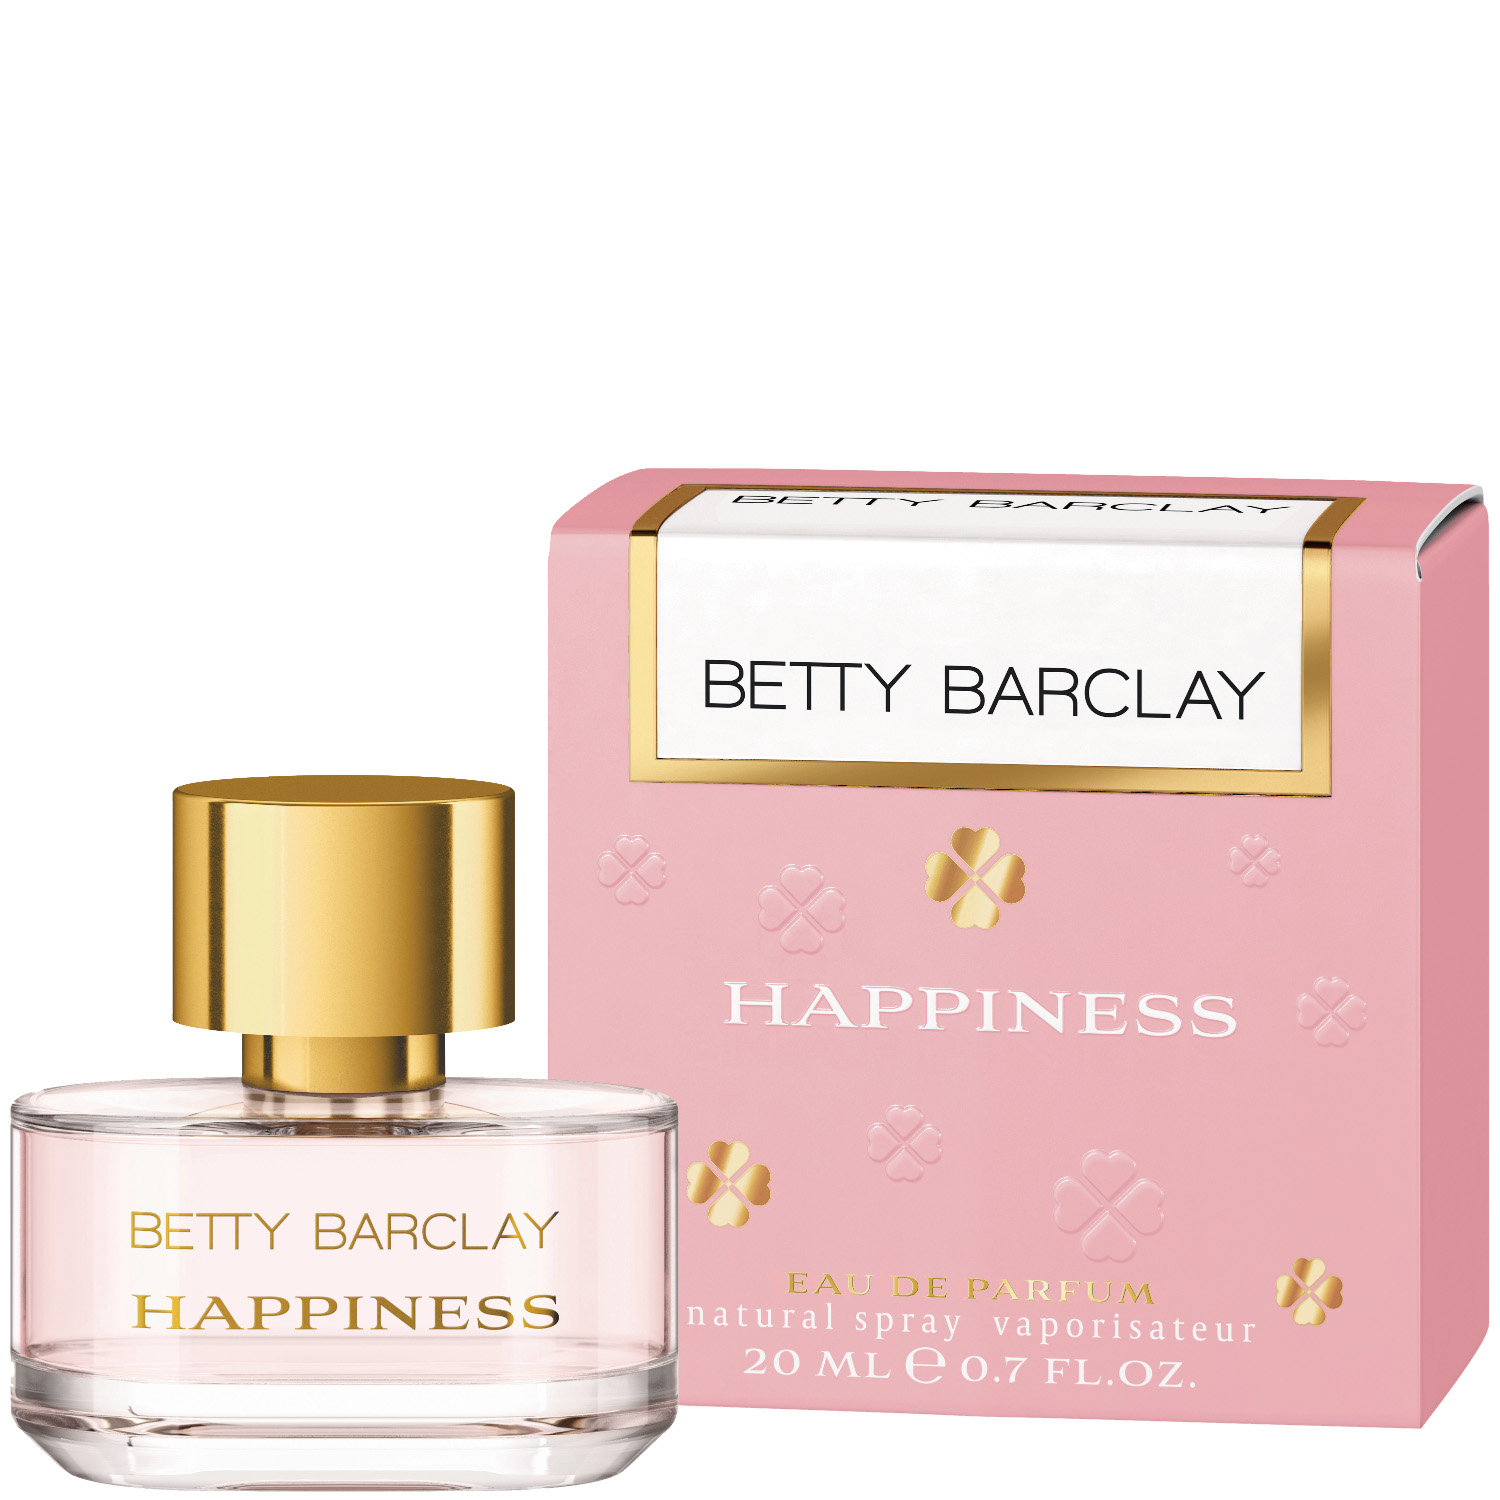 Betty Barclay Happiness Eau de Parfum 20ml